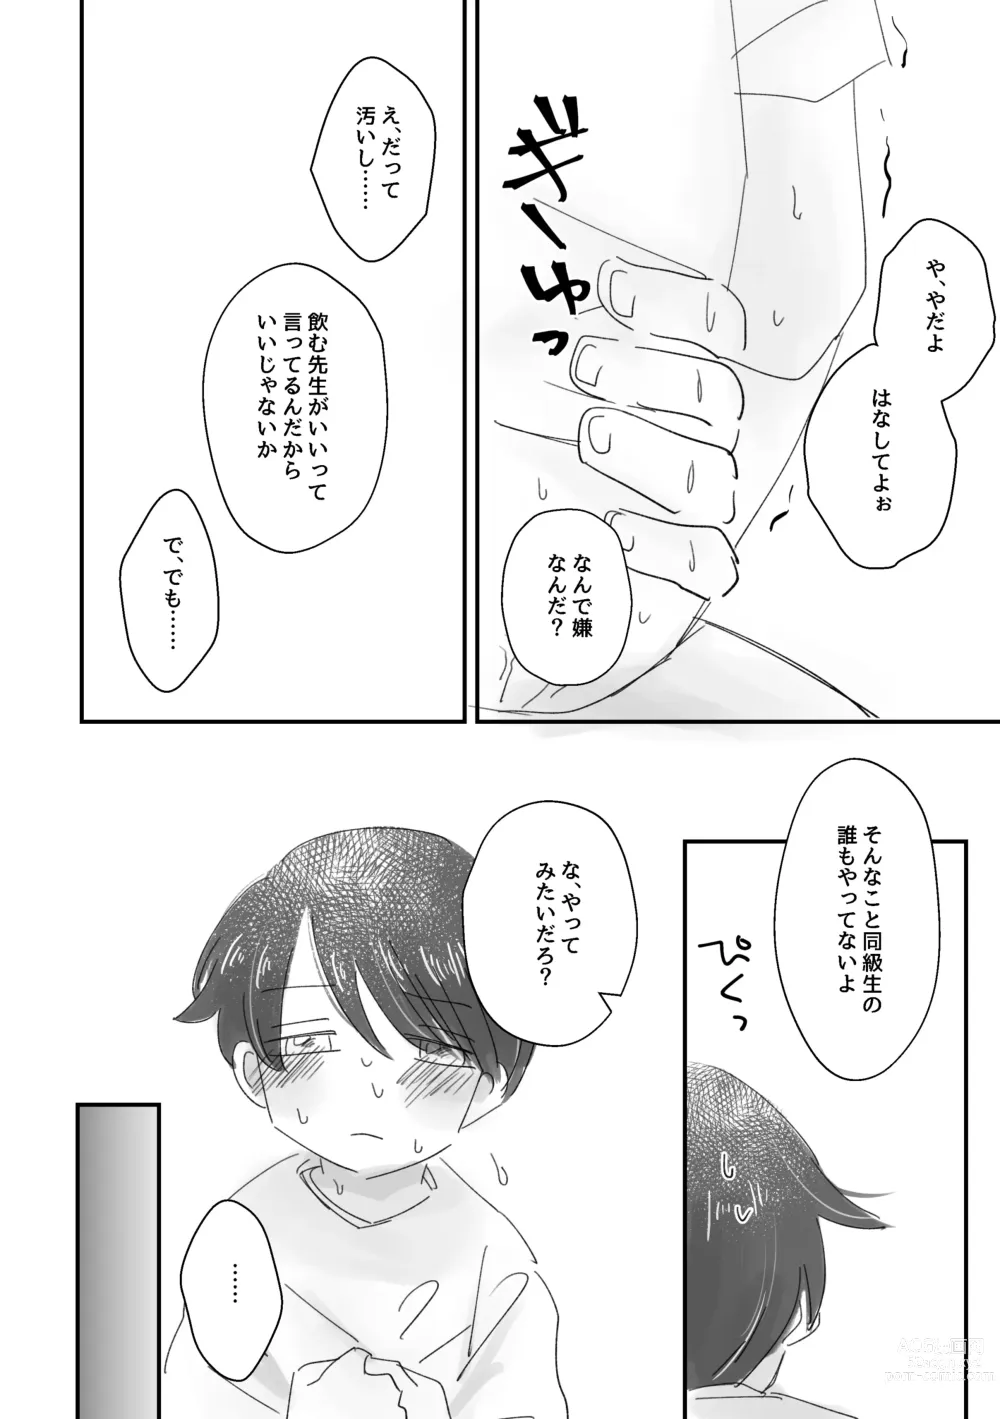 Page 21 of doujinshi Kawaii、 Iiko